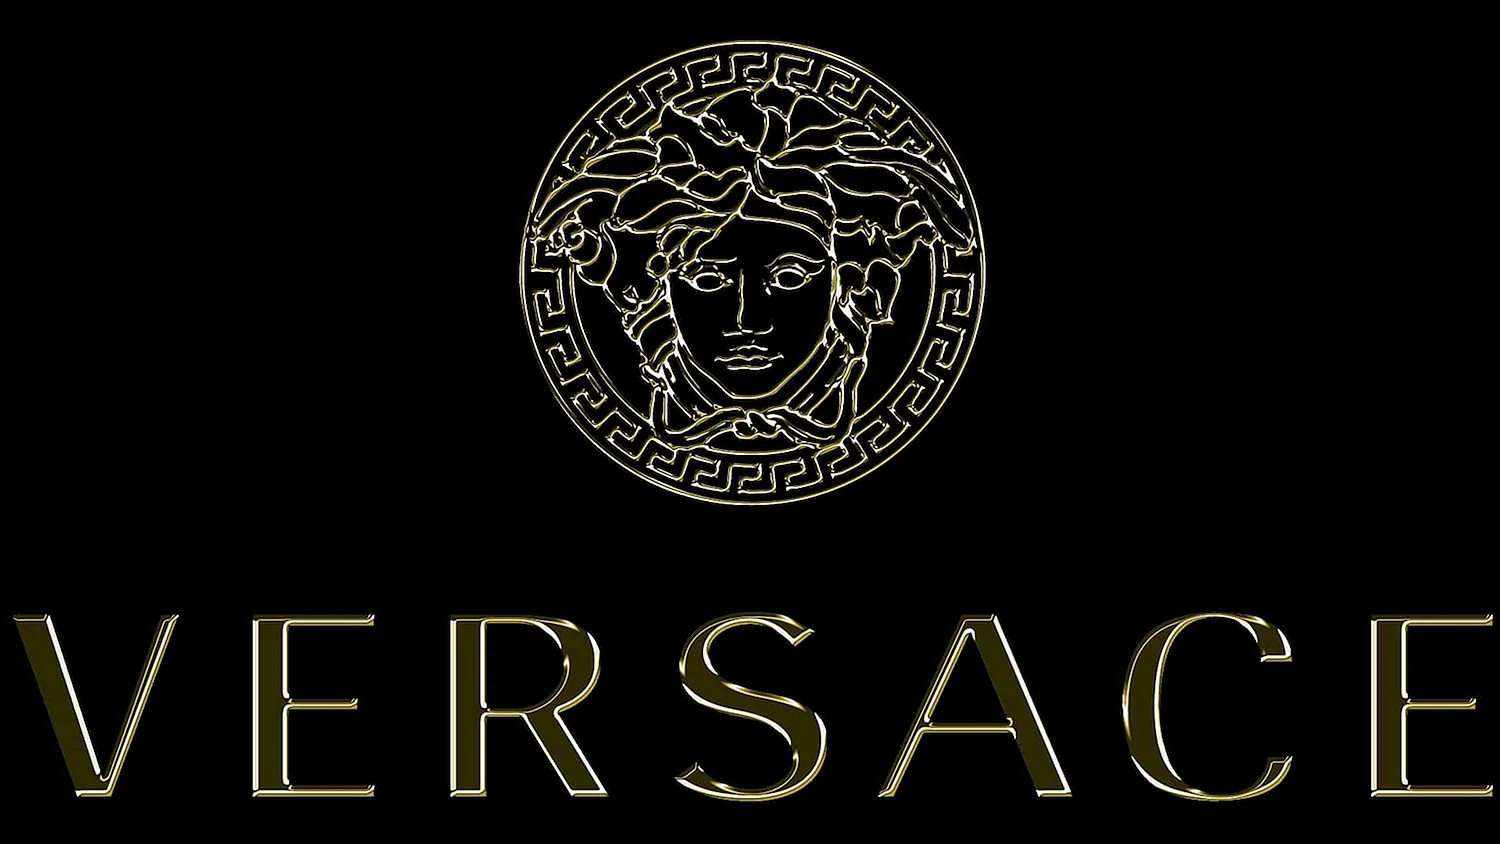 Versace brand logo